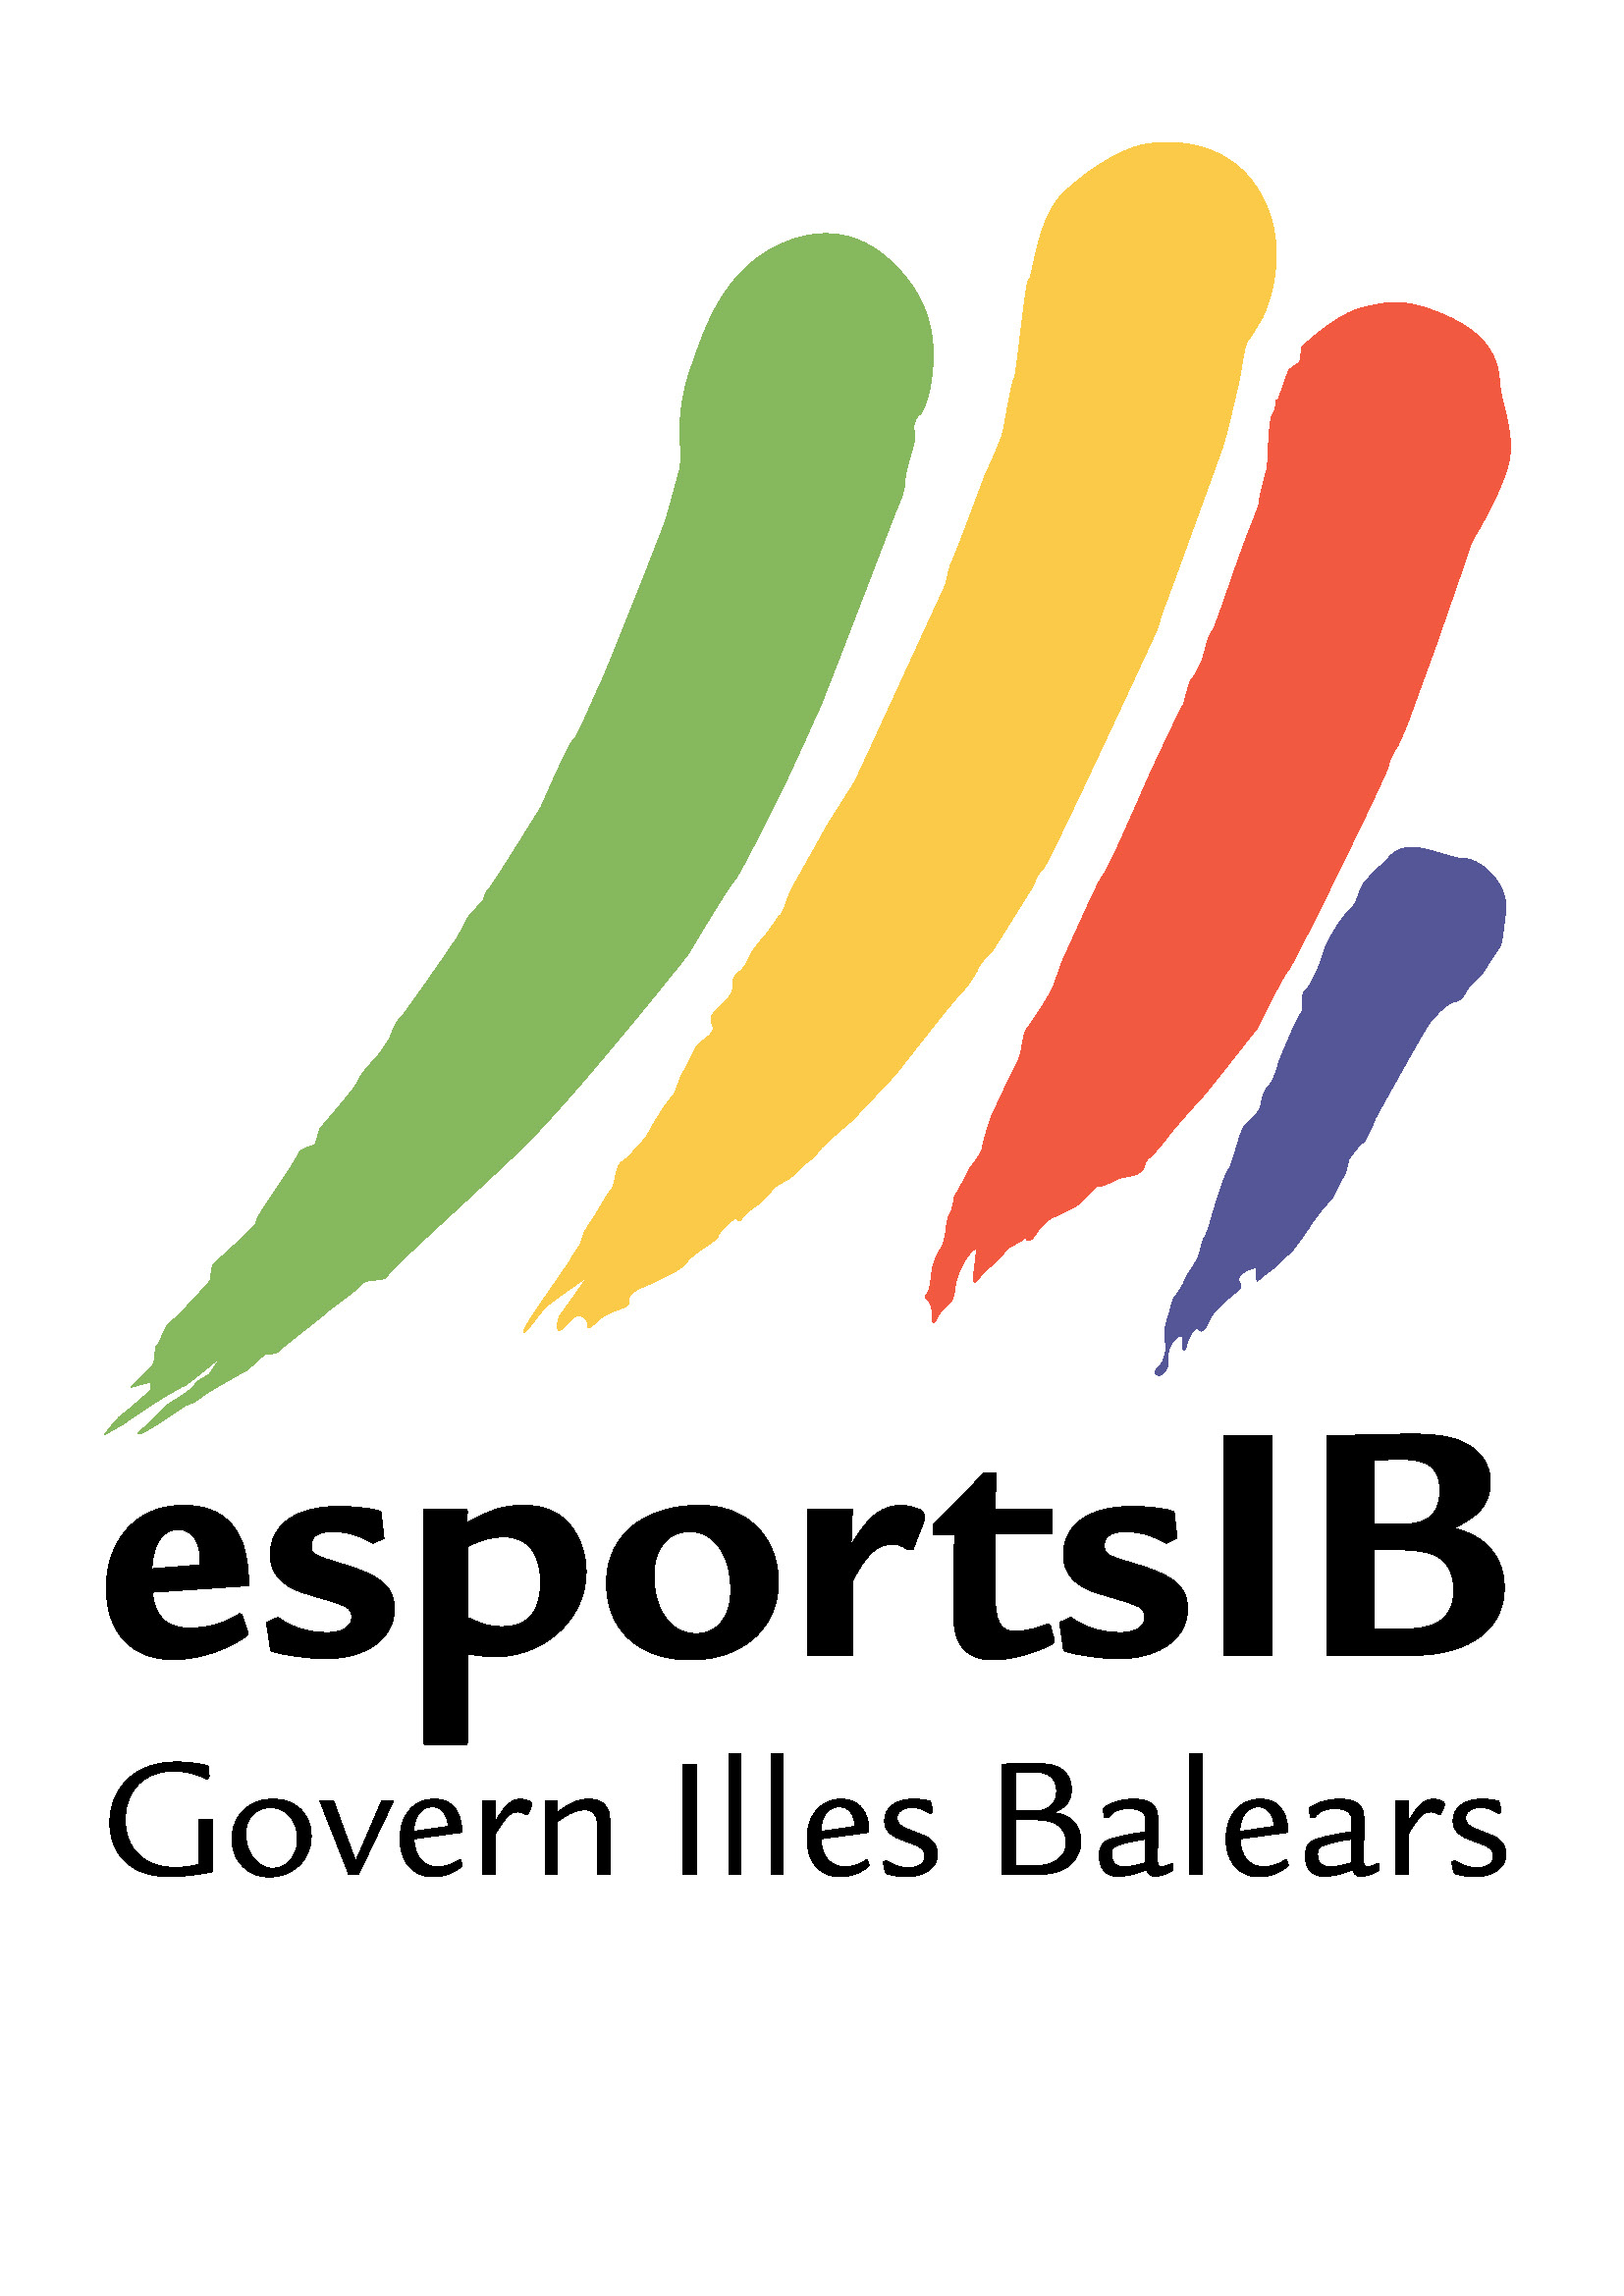 Esports IB